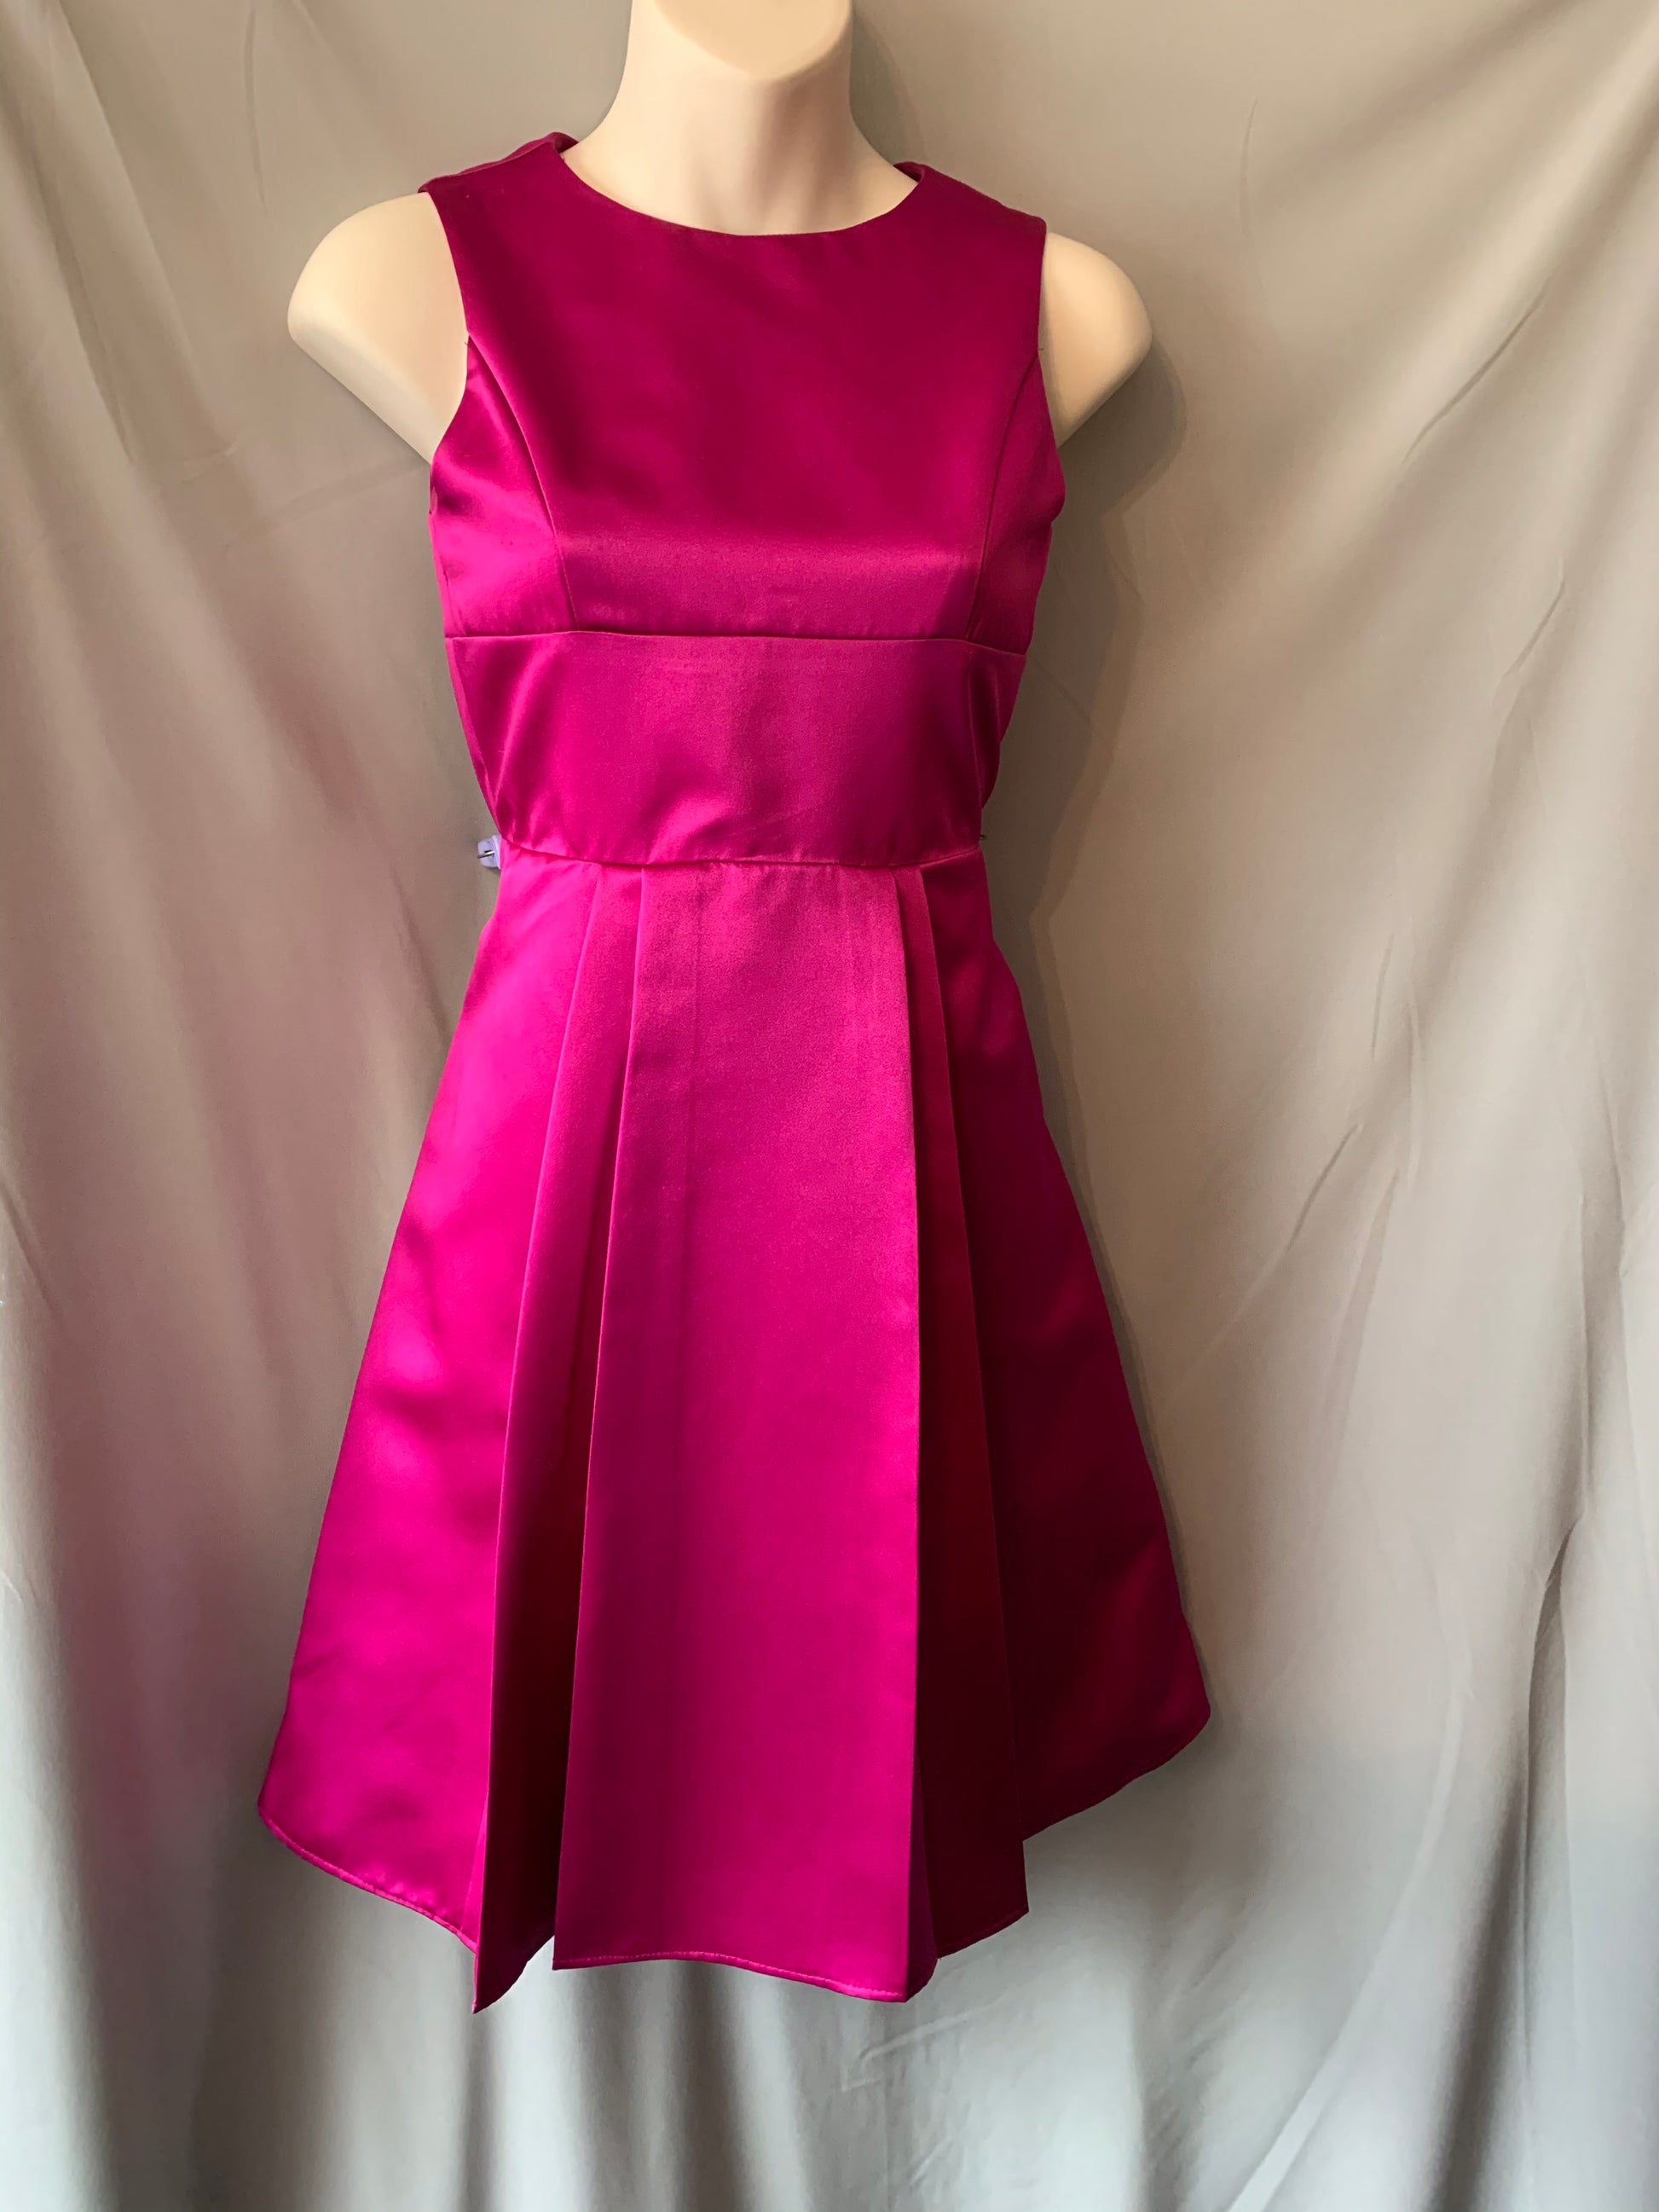 Short Satin Dress Size 4 Style 2669 - MISS LESTER'S 